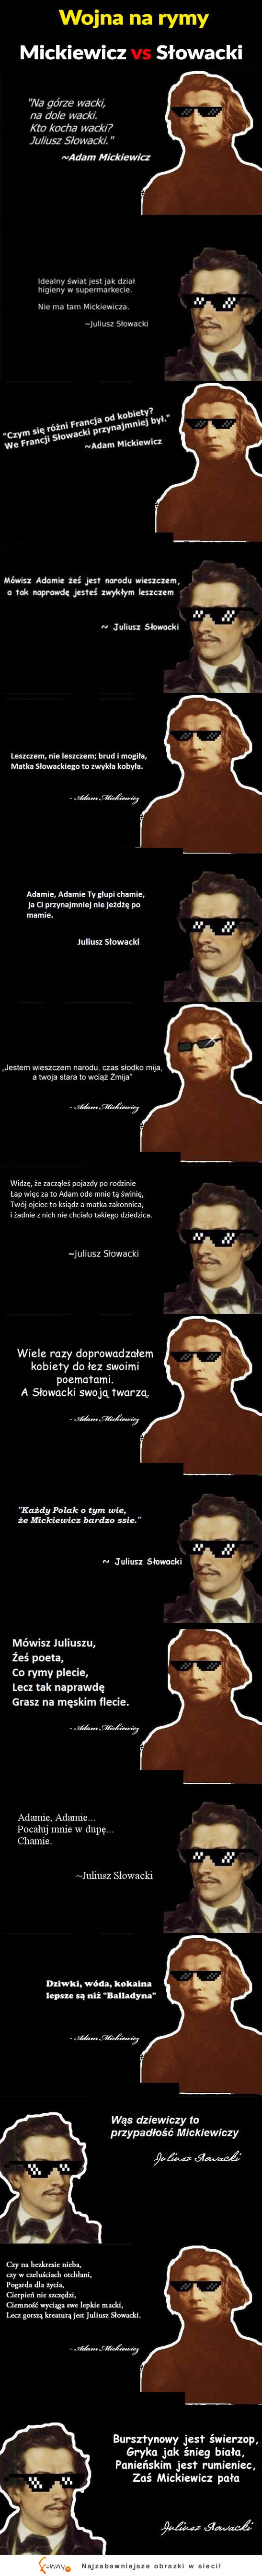 Wojna na riposty! Mickiewicz vs Słowacki! HAHAHA